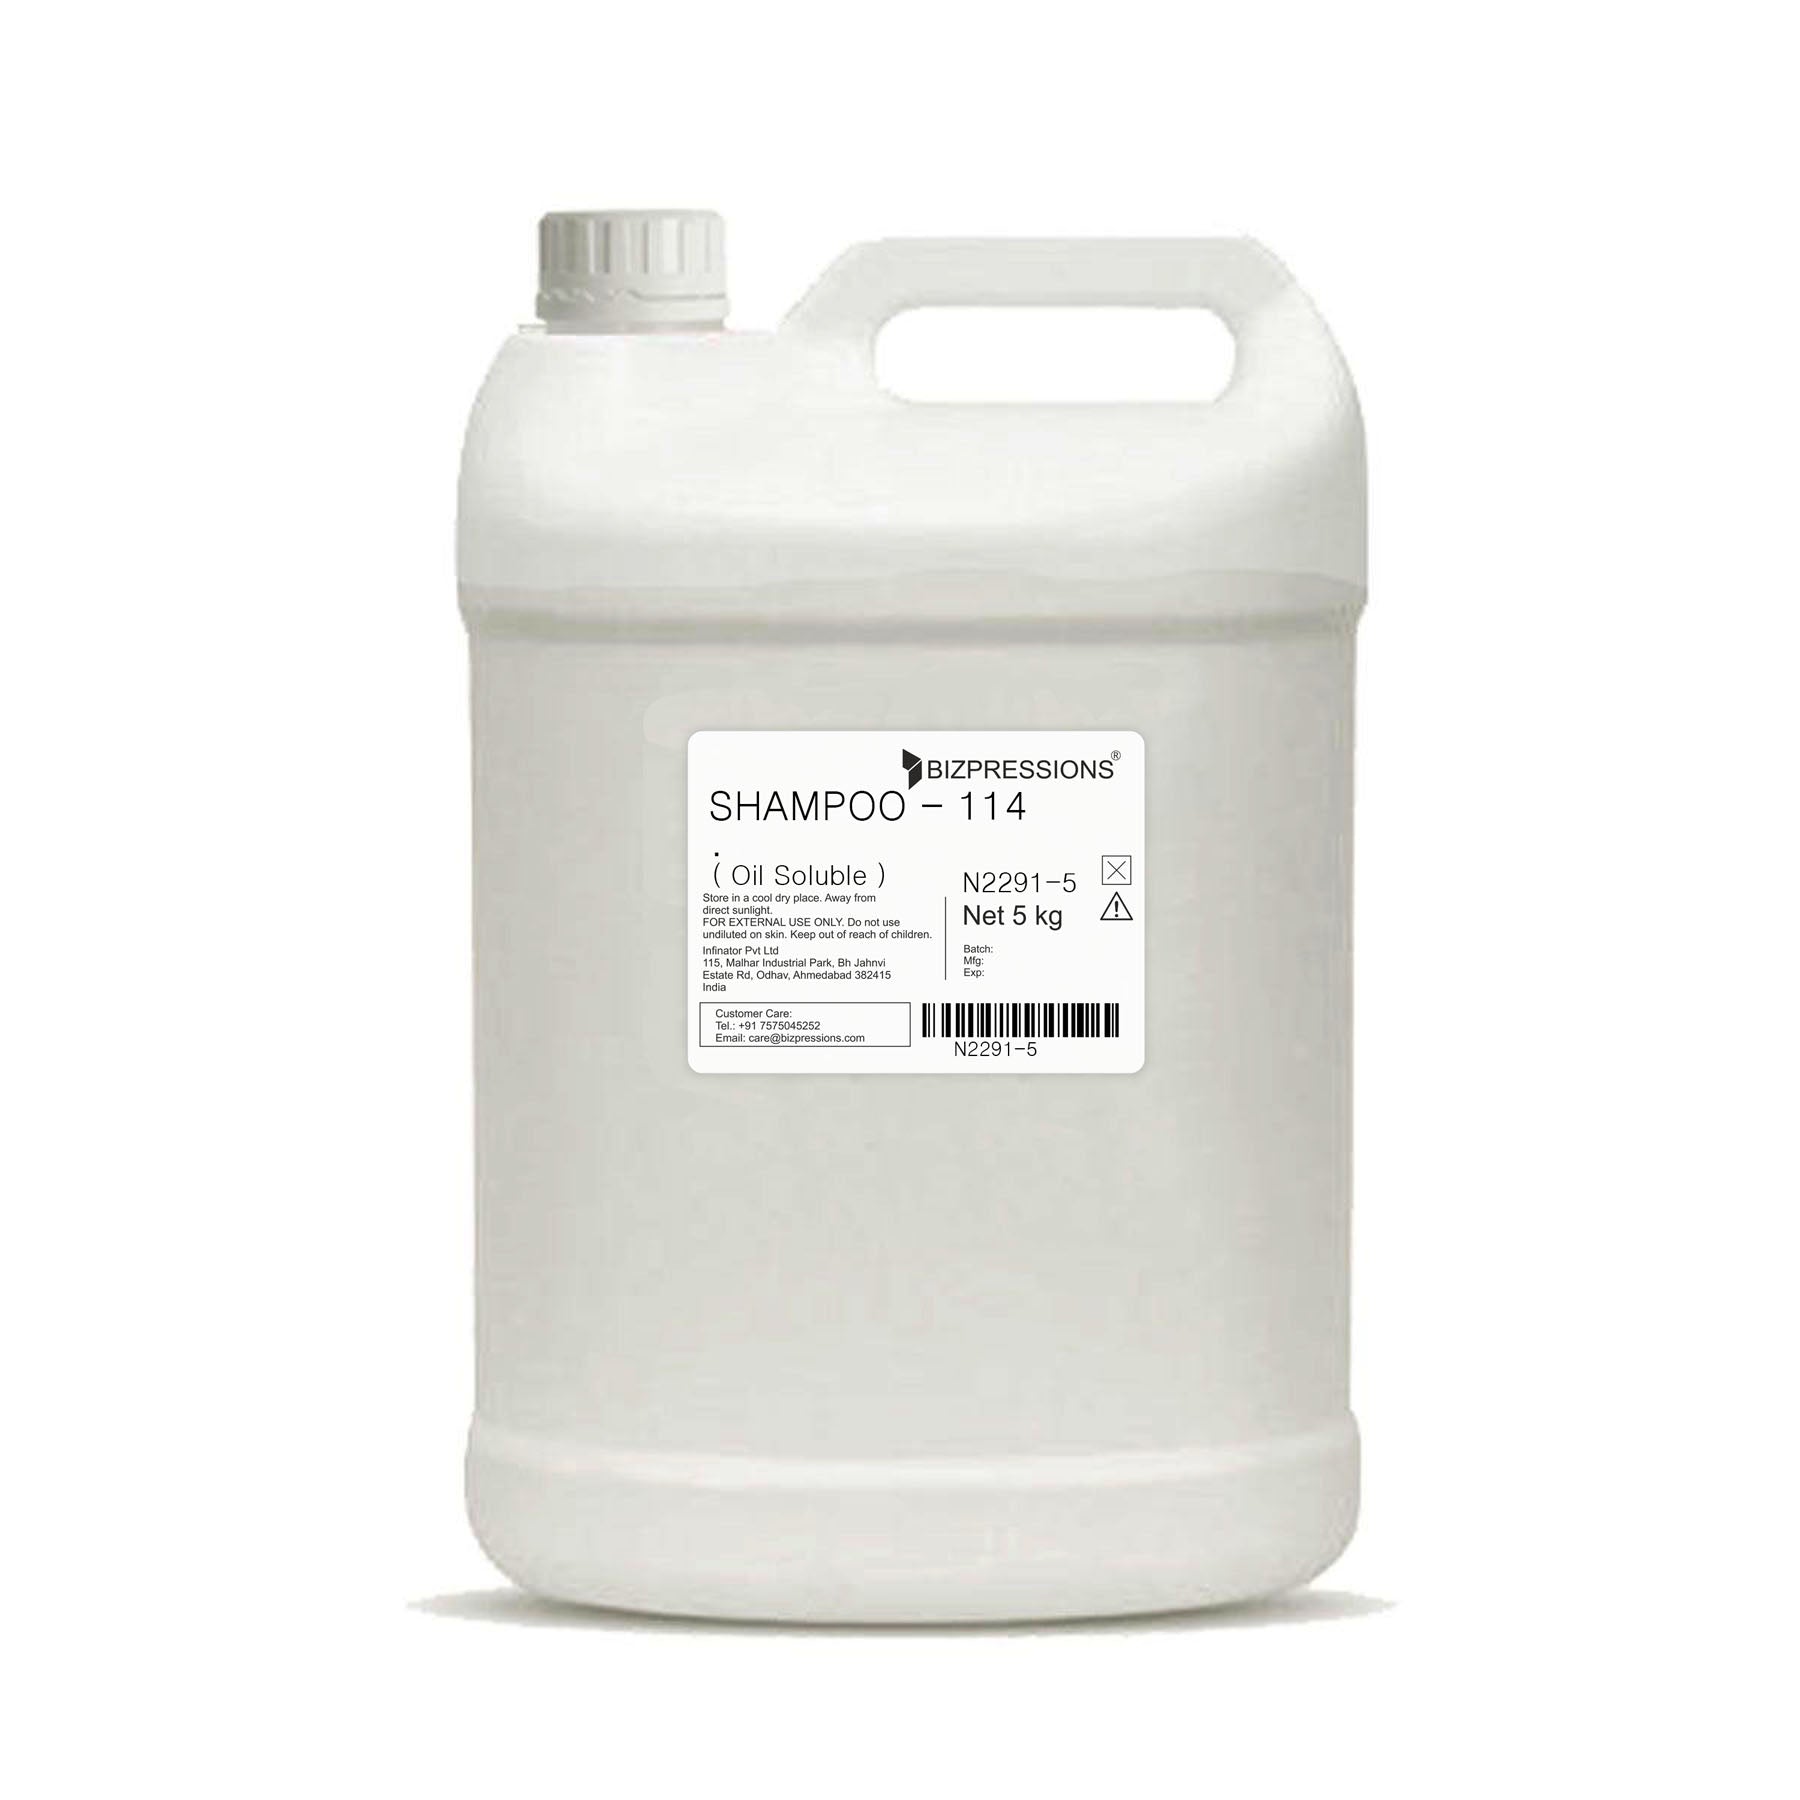 SHAMPOO - 114 - Fragrance ( Oil Soluble ) - 5 kg